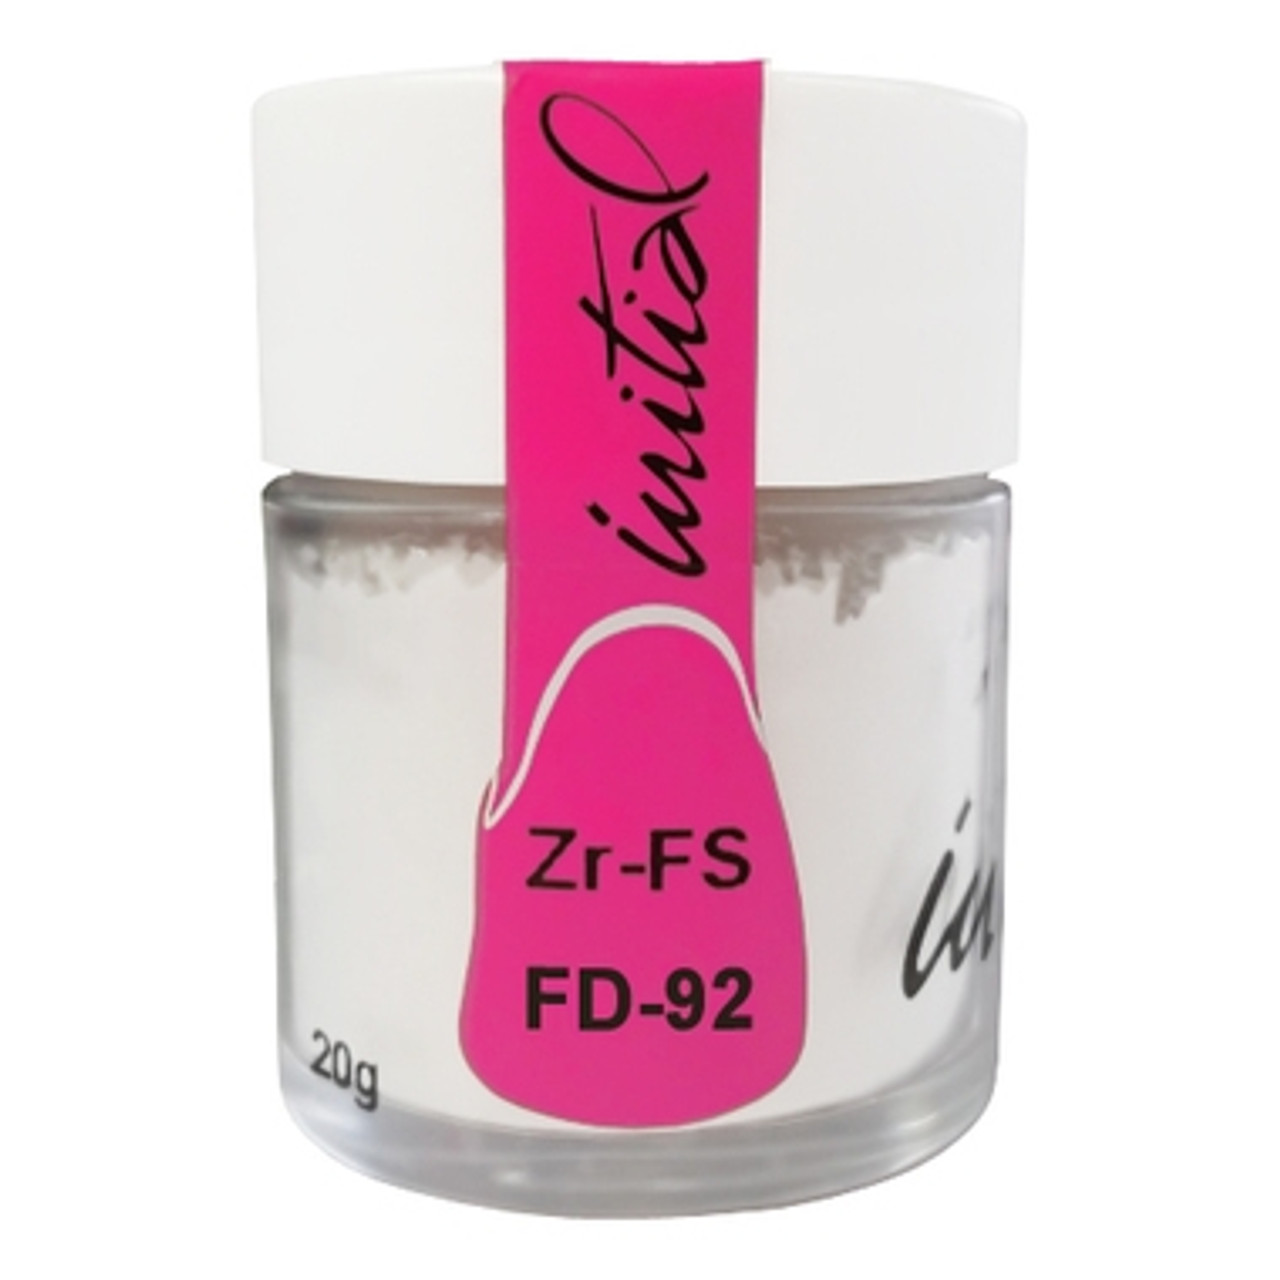 Initial Zr Fluo-Dentin FD-92, 20g, GC America, 875092